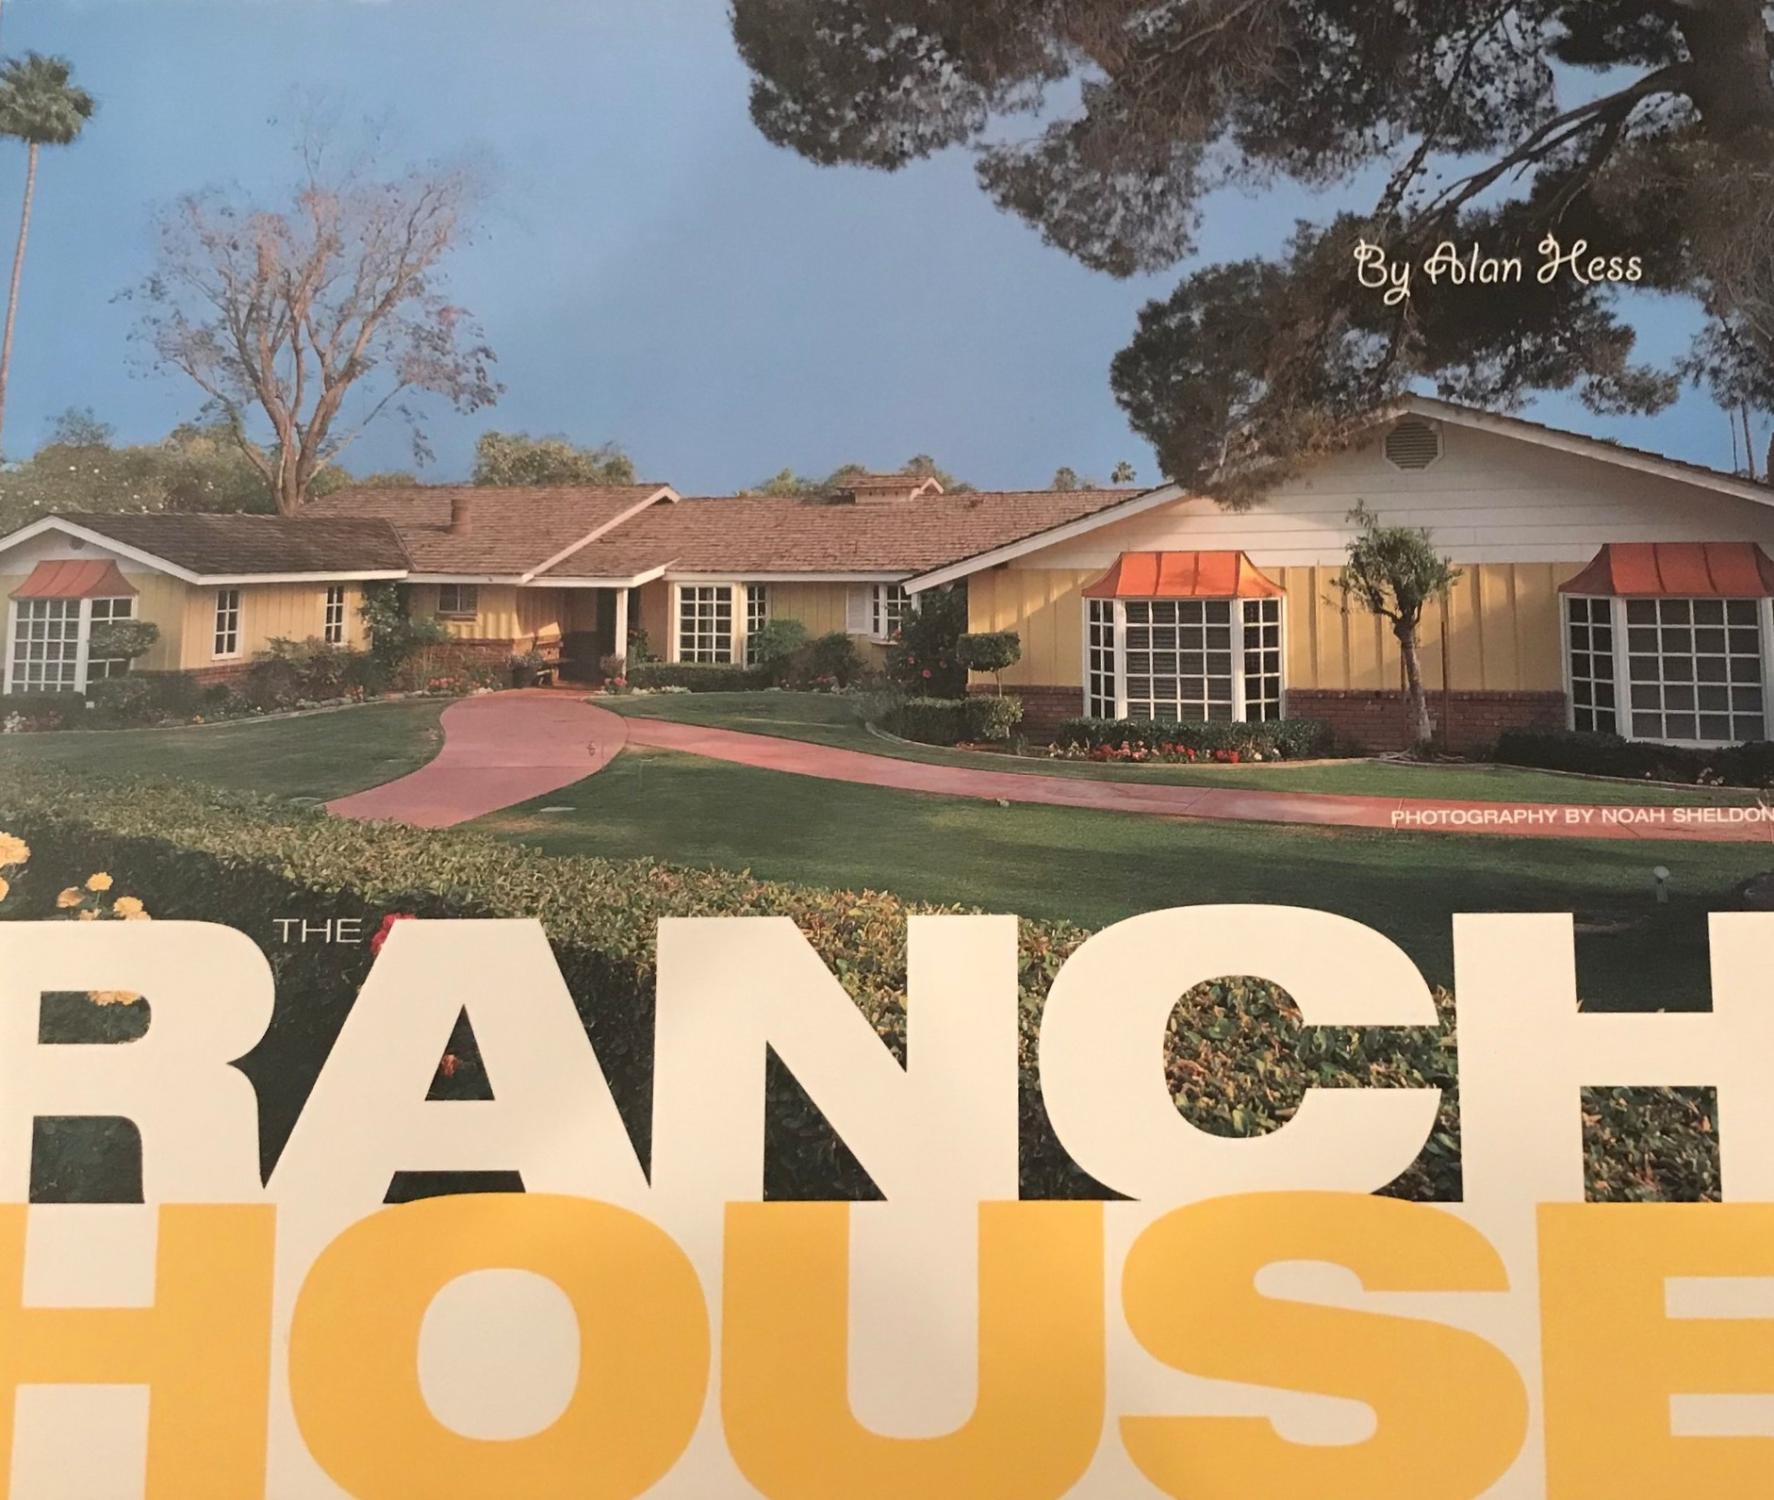 The Ranch House - Alan Hess